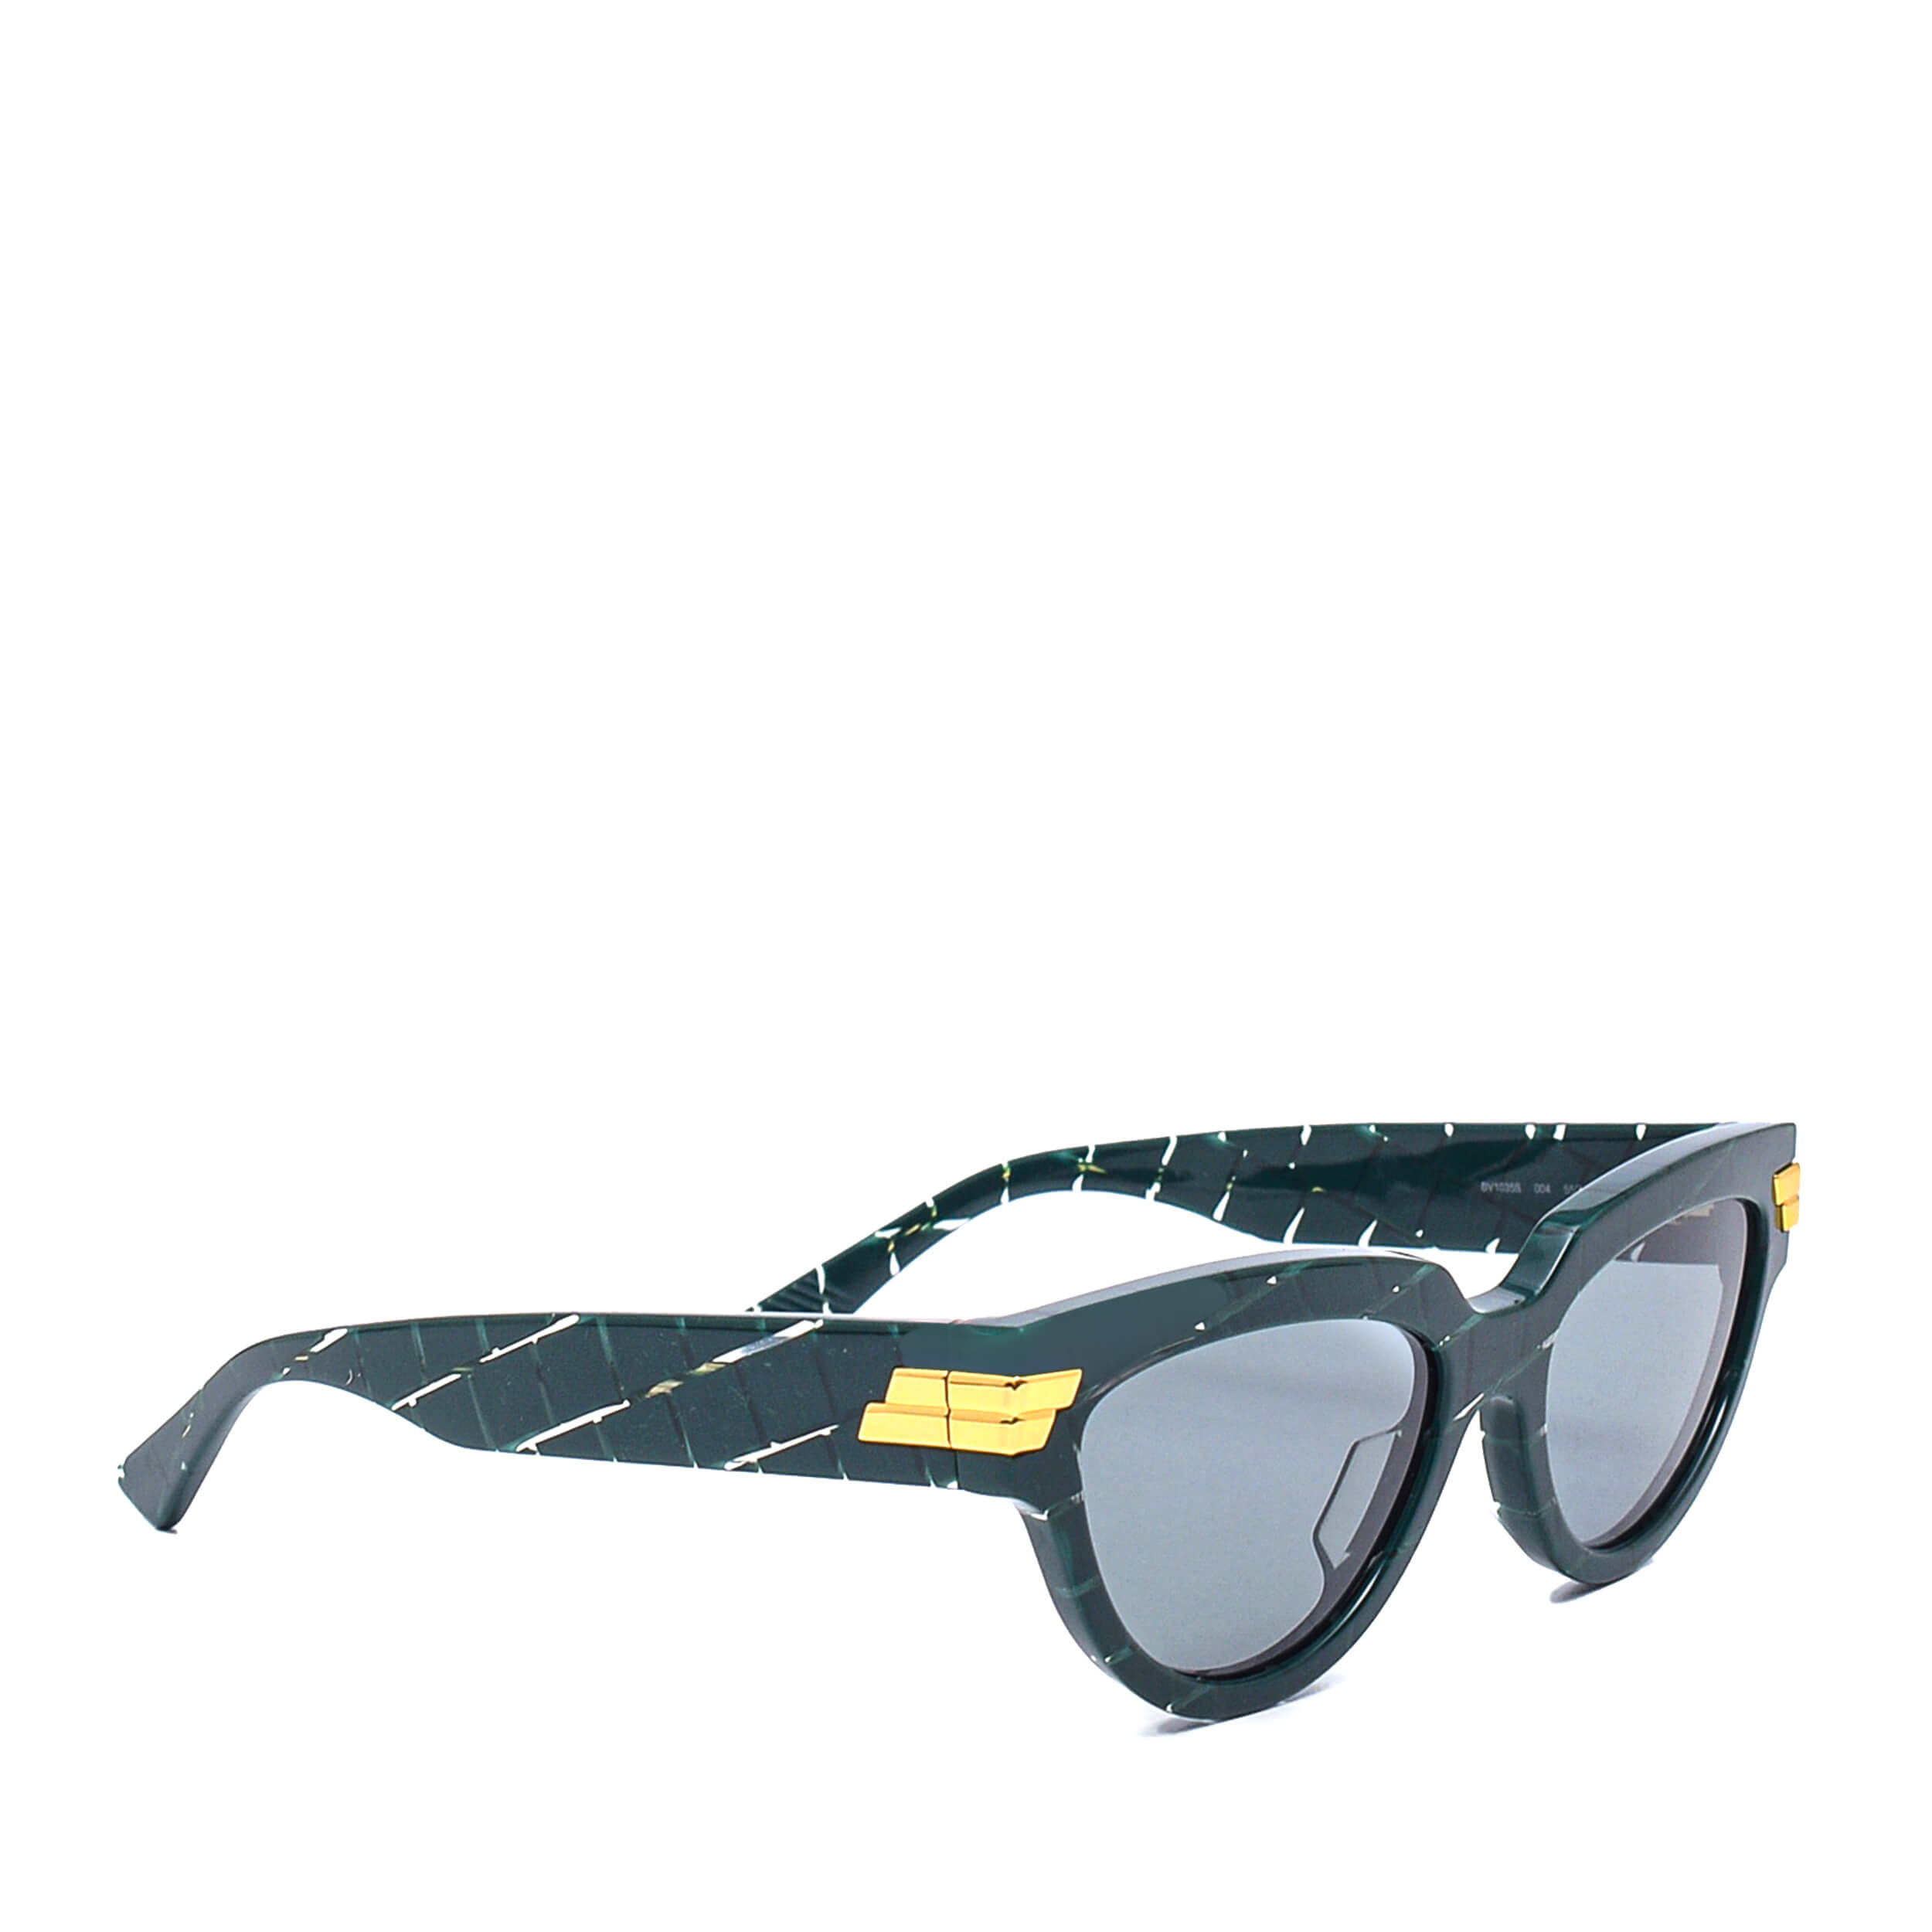 Bottega Veneta - Green Cat Eye Sunglasses 